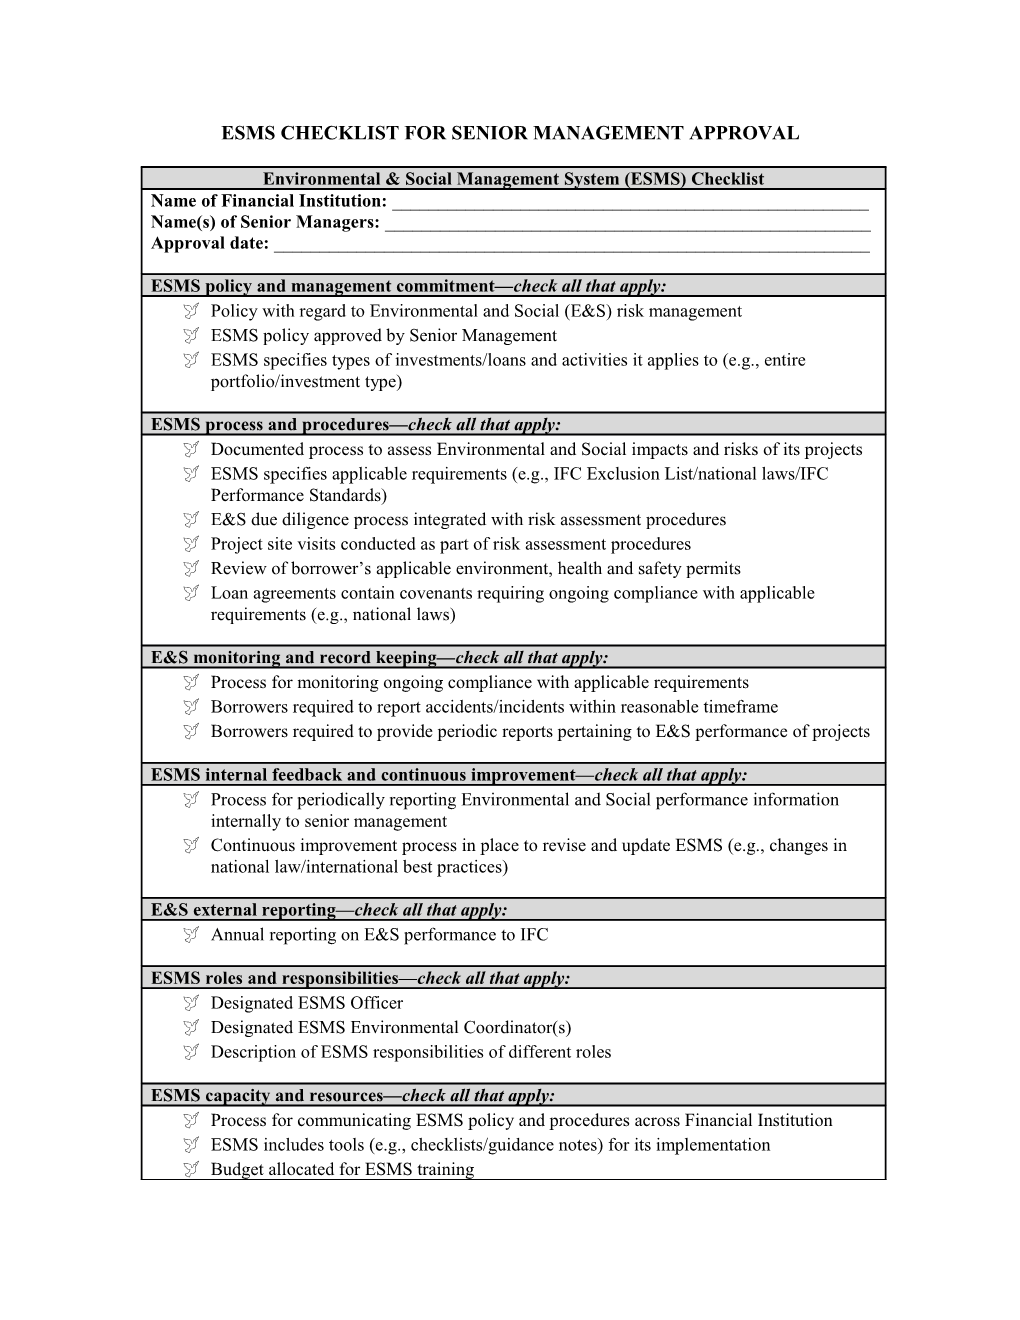 ESMS Checklist for Senior Management Approval